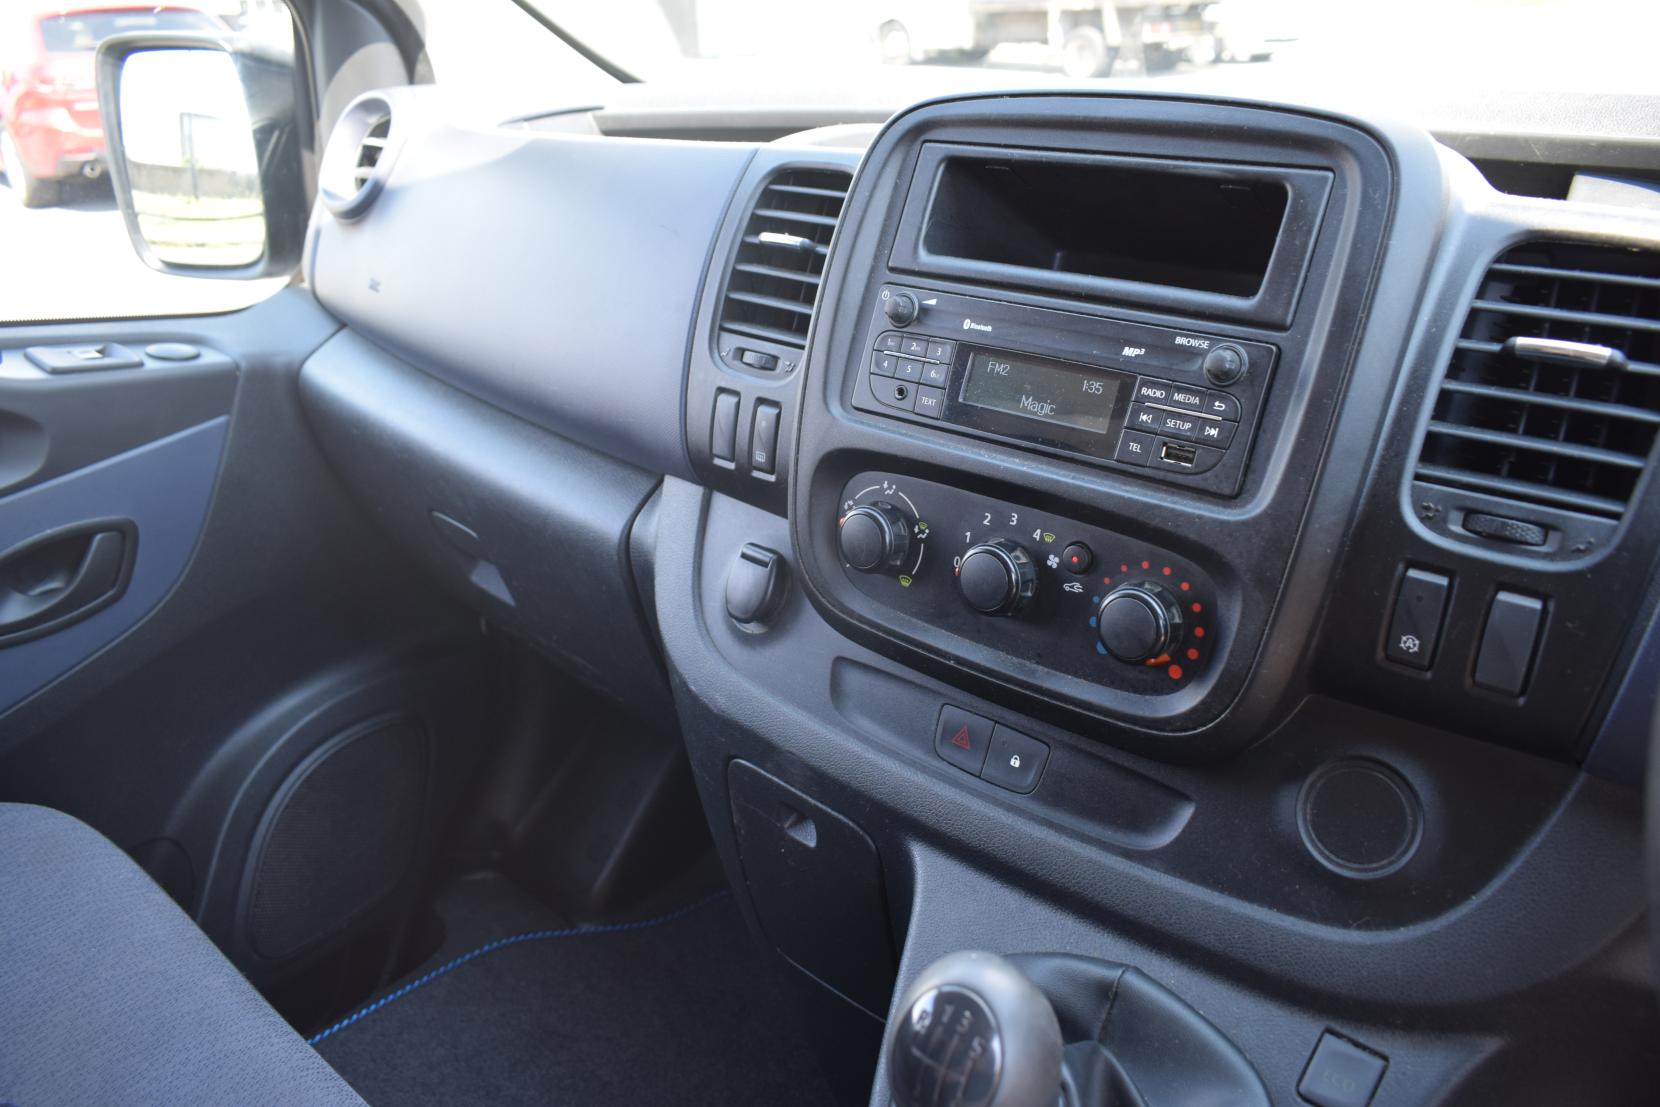 Vauxhall Vivaro 1.6 CDTi 2900 ecoFLEX Temperature Controlled 5dr Diesel Manual L1 H1 (s/s) (160 g/km, 89 bhp)